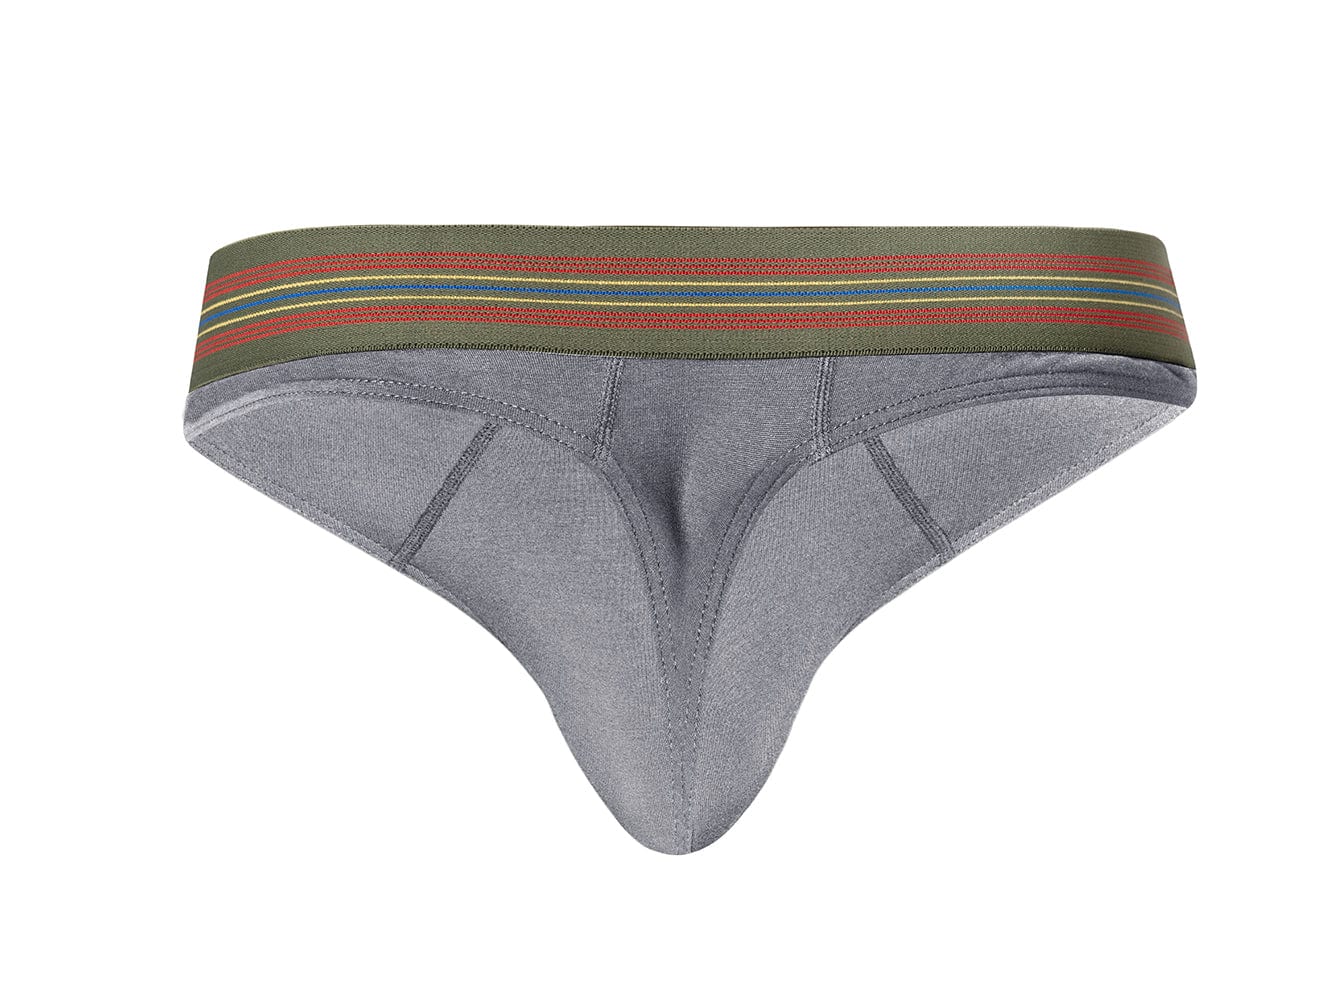 Men's Athletic Underwear - BIKE® Athletic